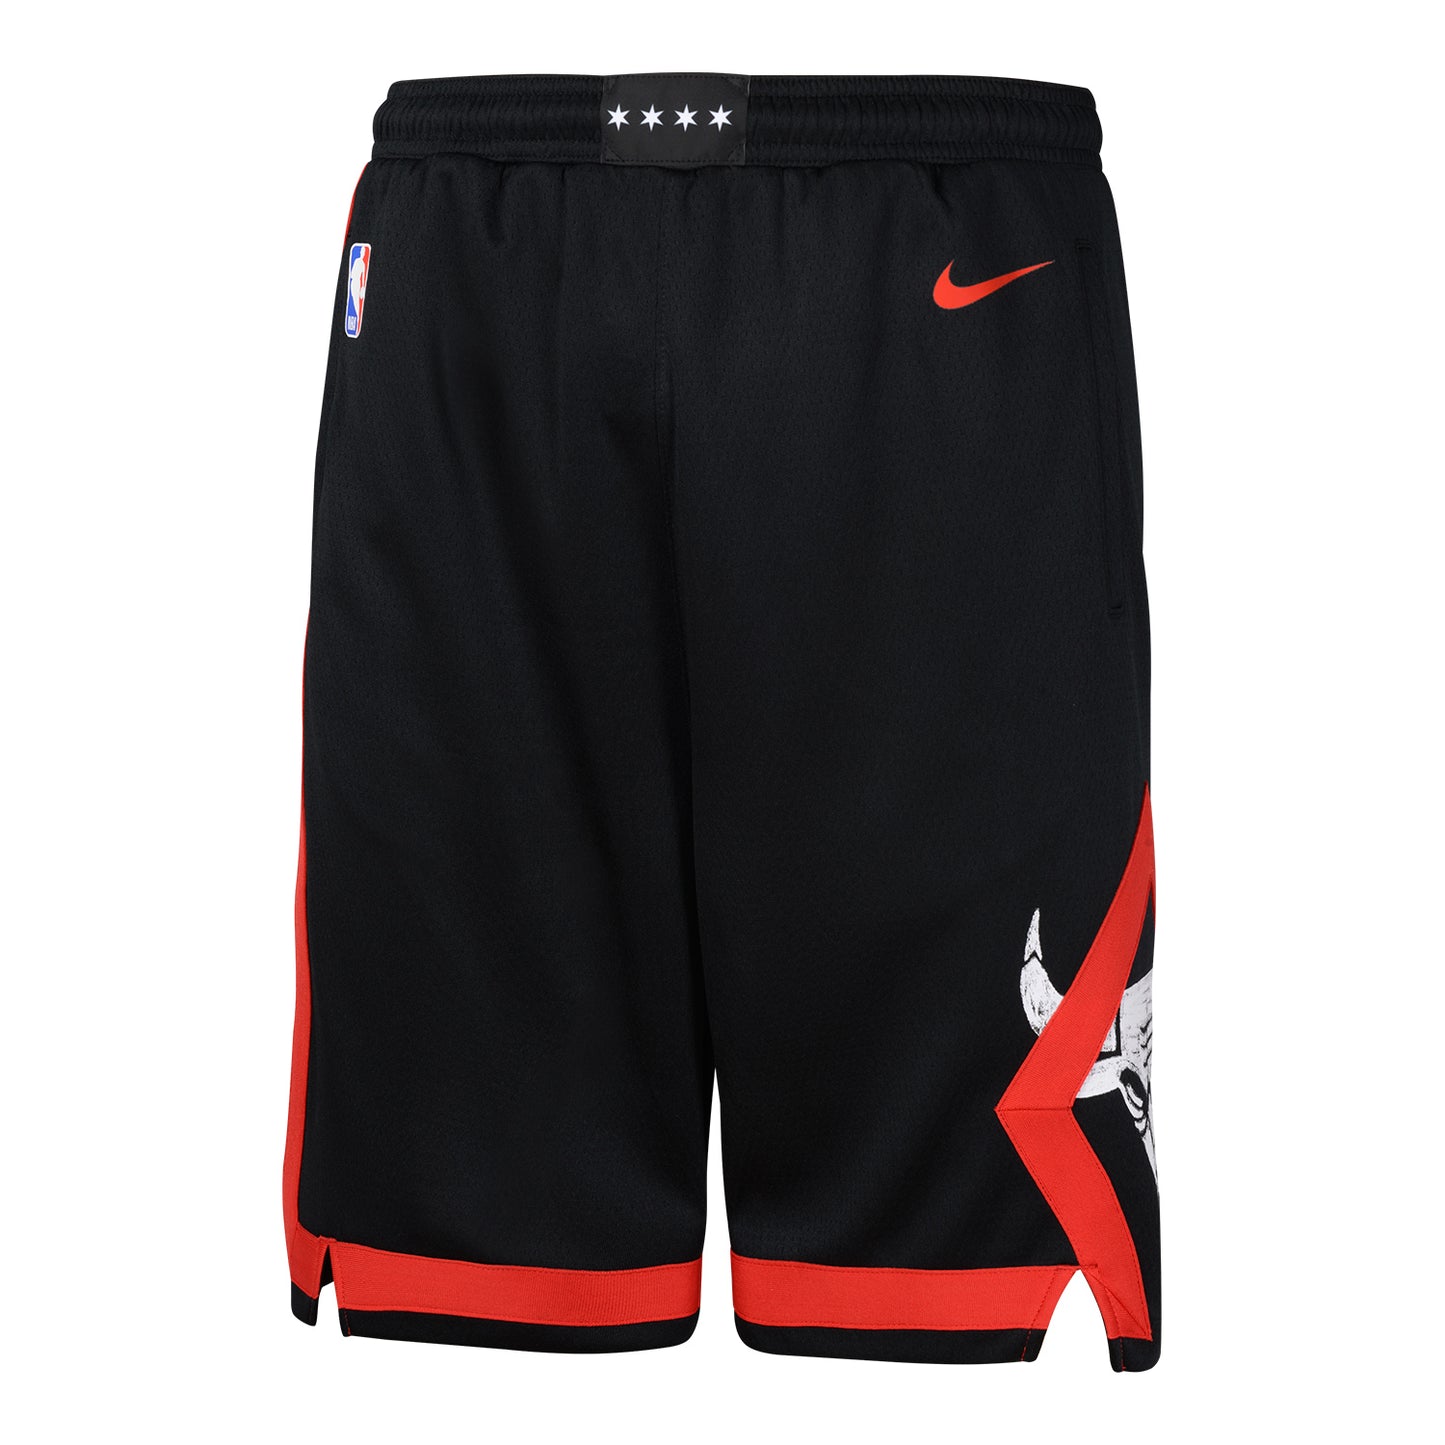  NBA Chicago Bulls Men's Shorts, Black , X-Small : Cycling Compression  Shorts : Sports & Outdoors